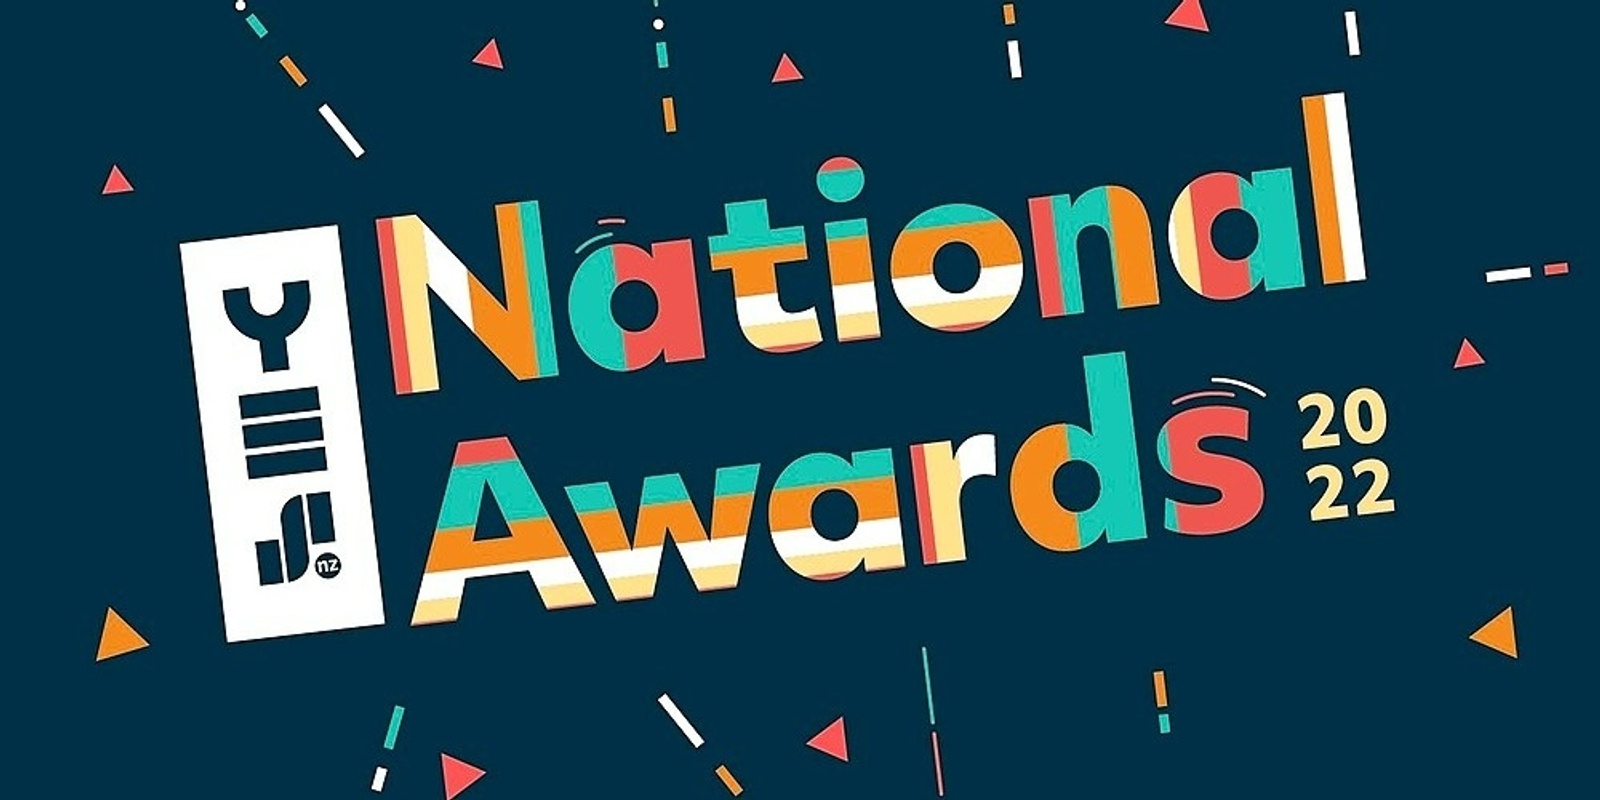 Banner image for Young Enterprise Scheme National Awards 2022